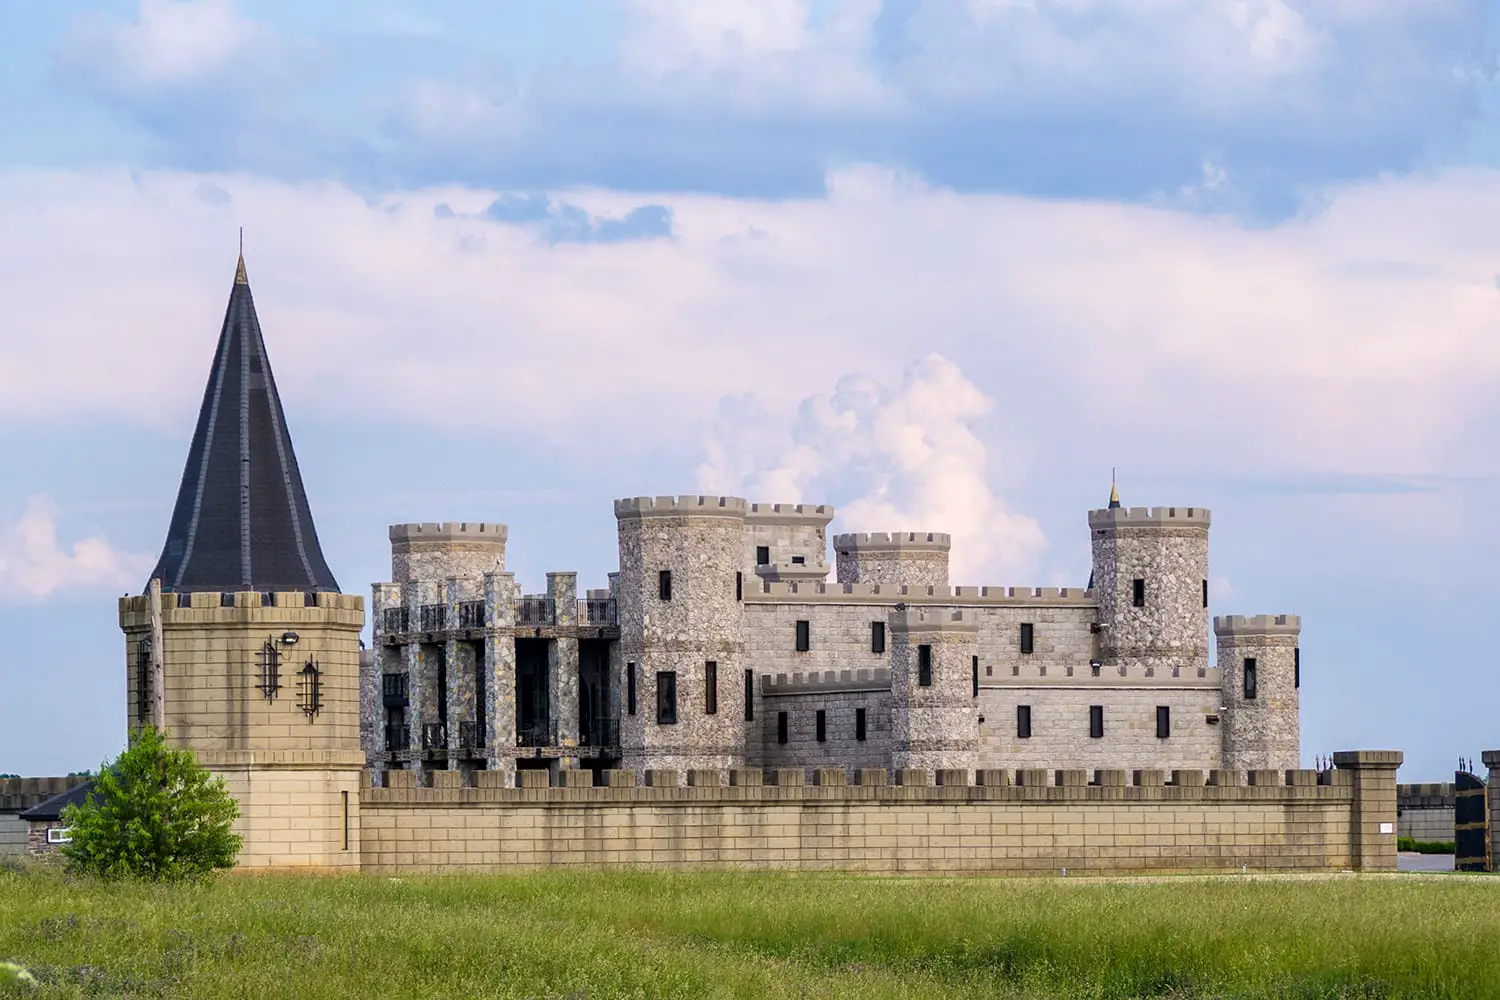 Kentucky Castle in the USA